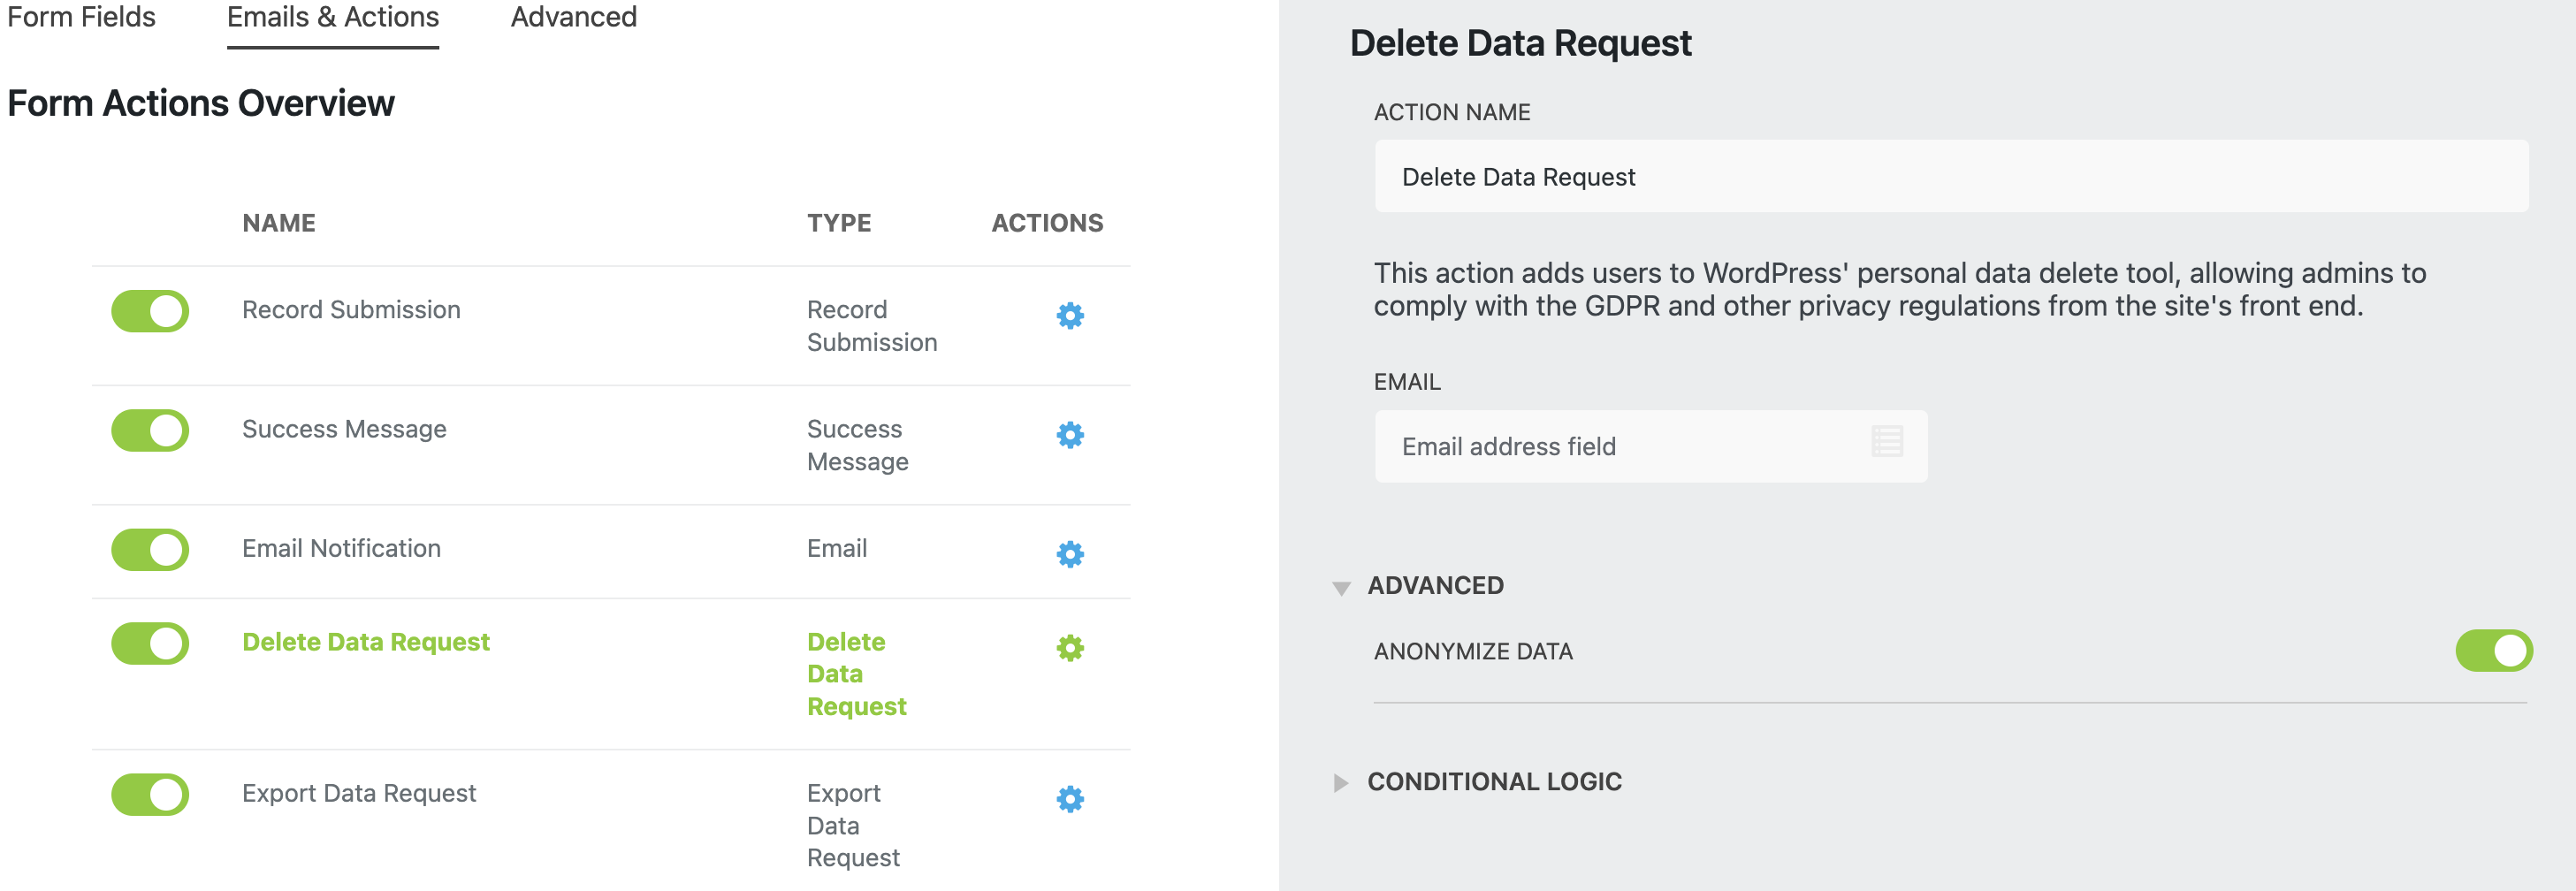 delete data request form action gdpr compliant